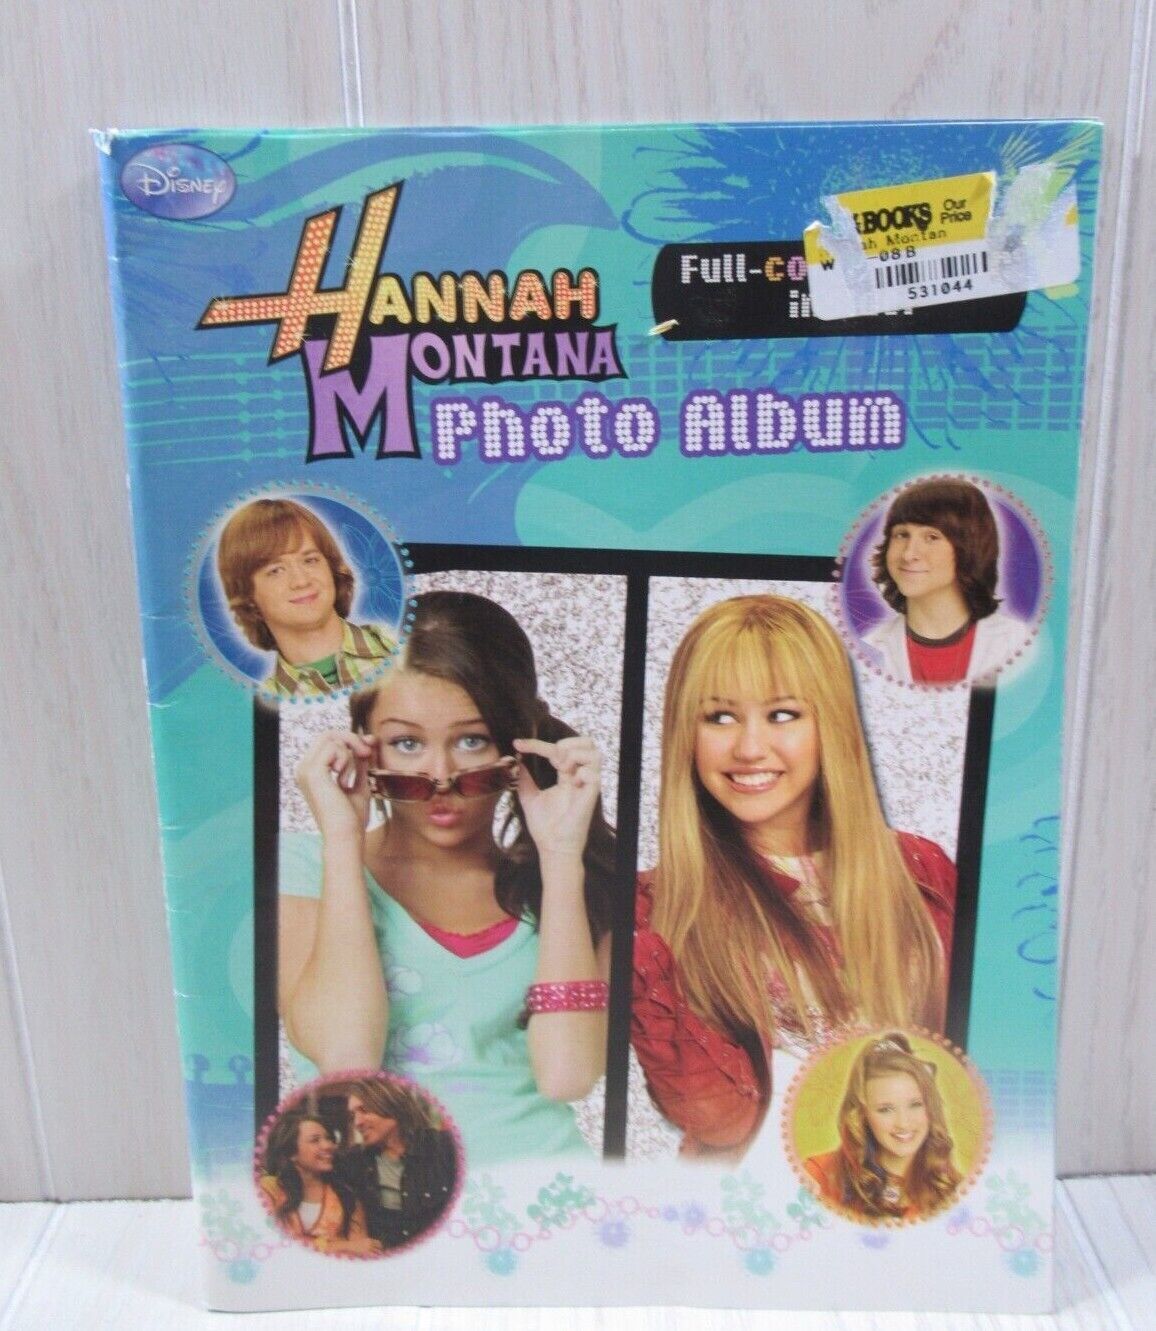 Disney Hannah Montana Miley Cyrus Photo Album Activity Book new w/ worn edges